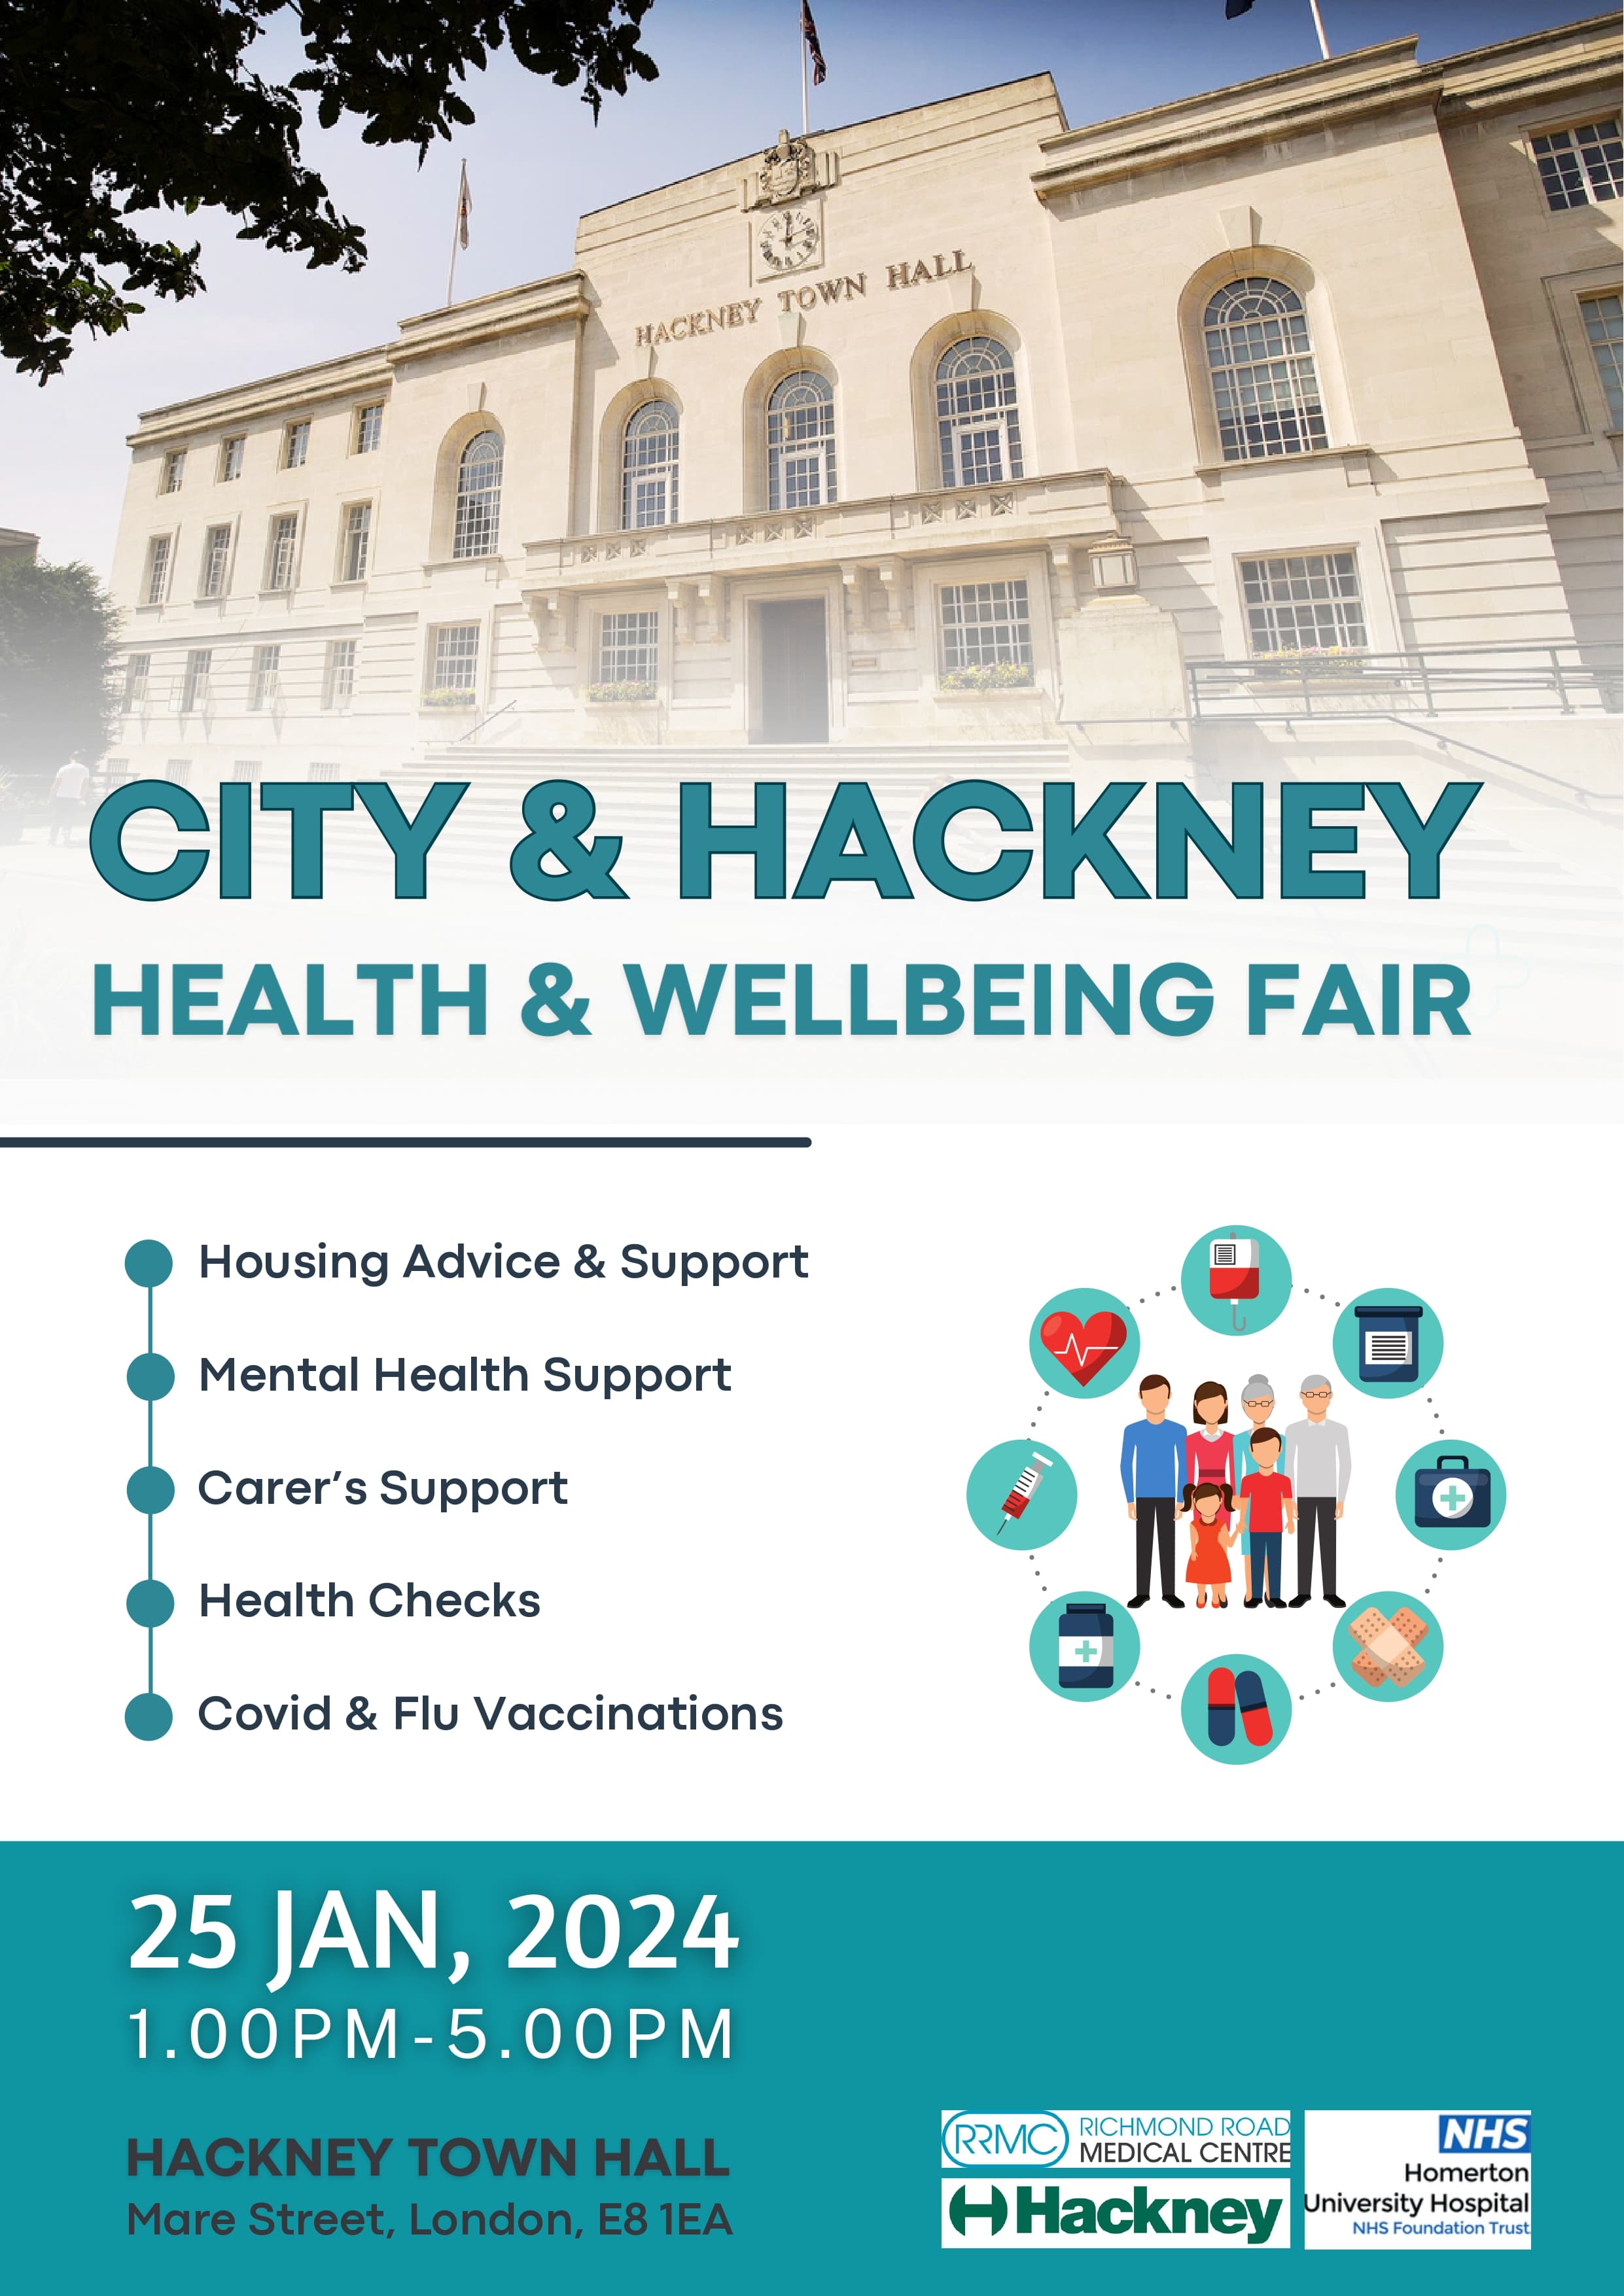 City & Hackney’s Health & Wellbeing Fair